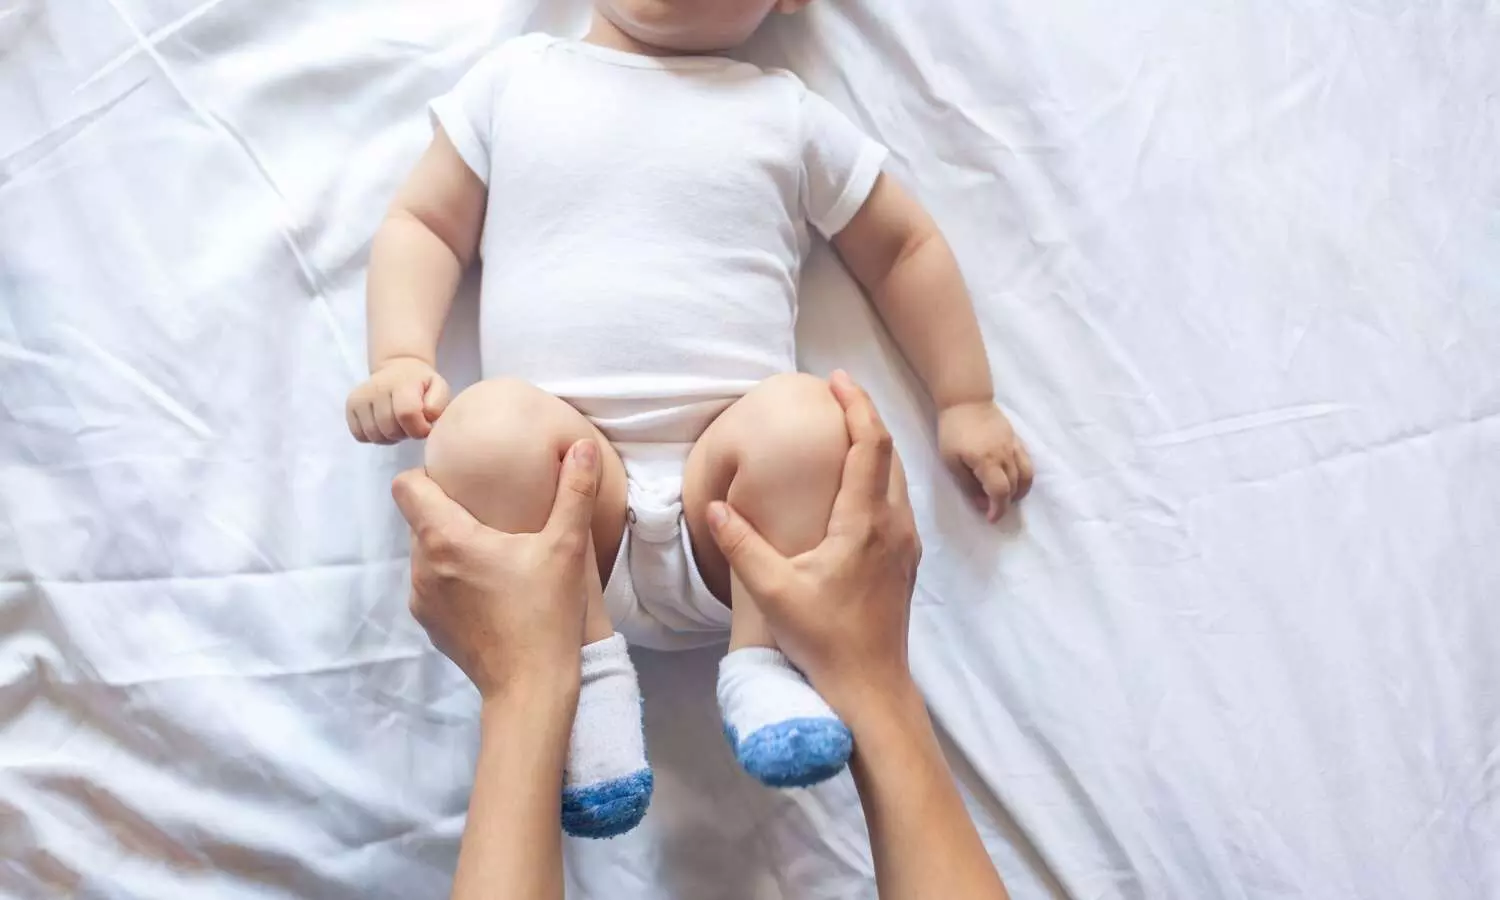 Spontaneous baby movements aid development of their sensorimotor system